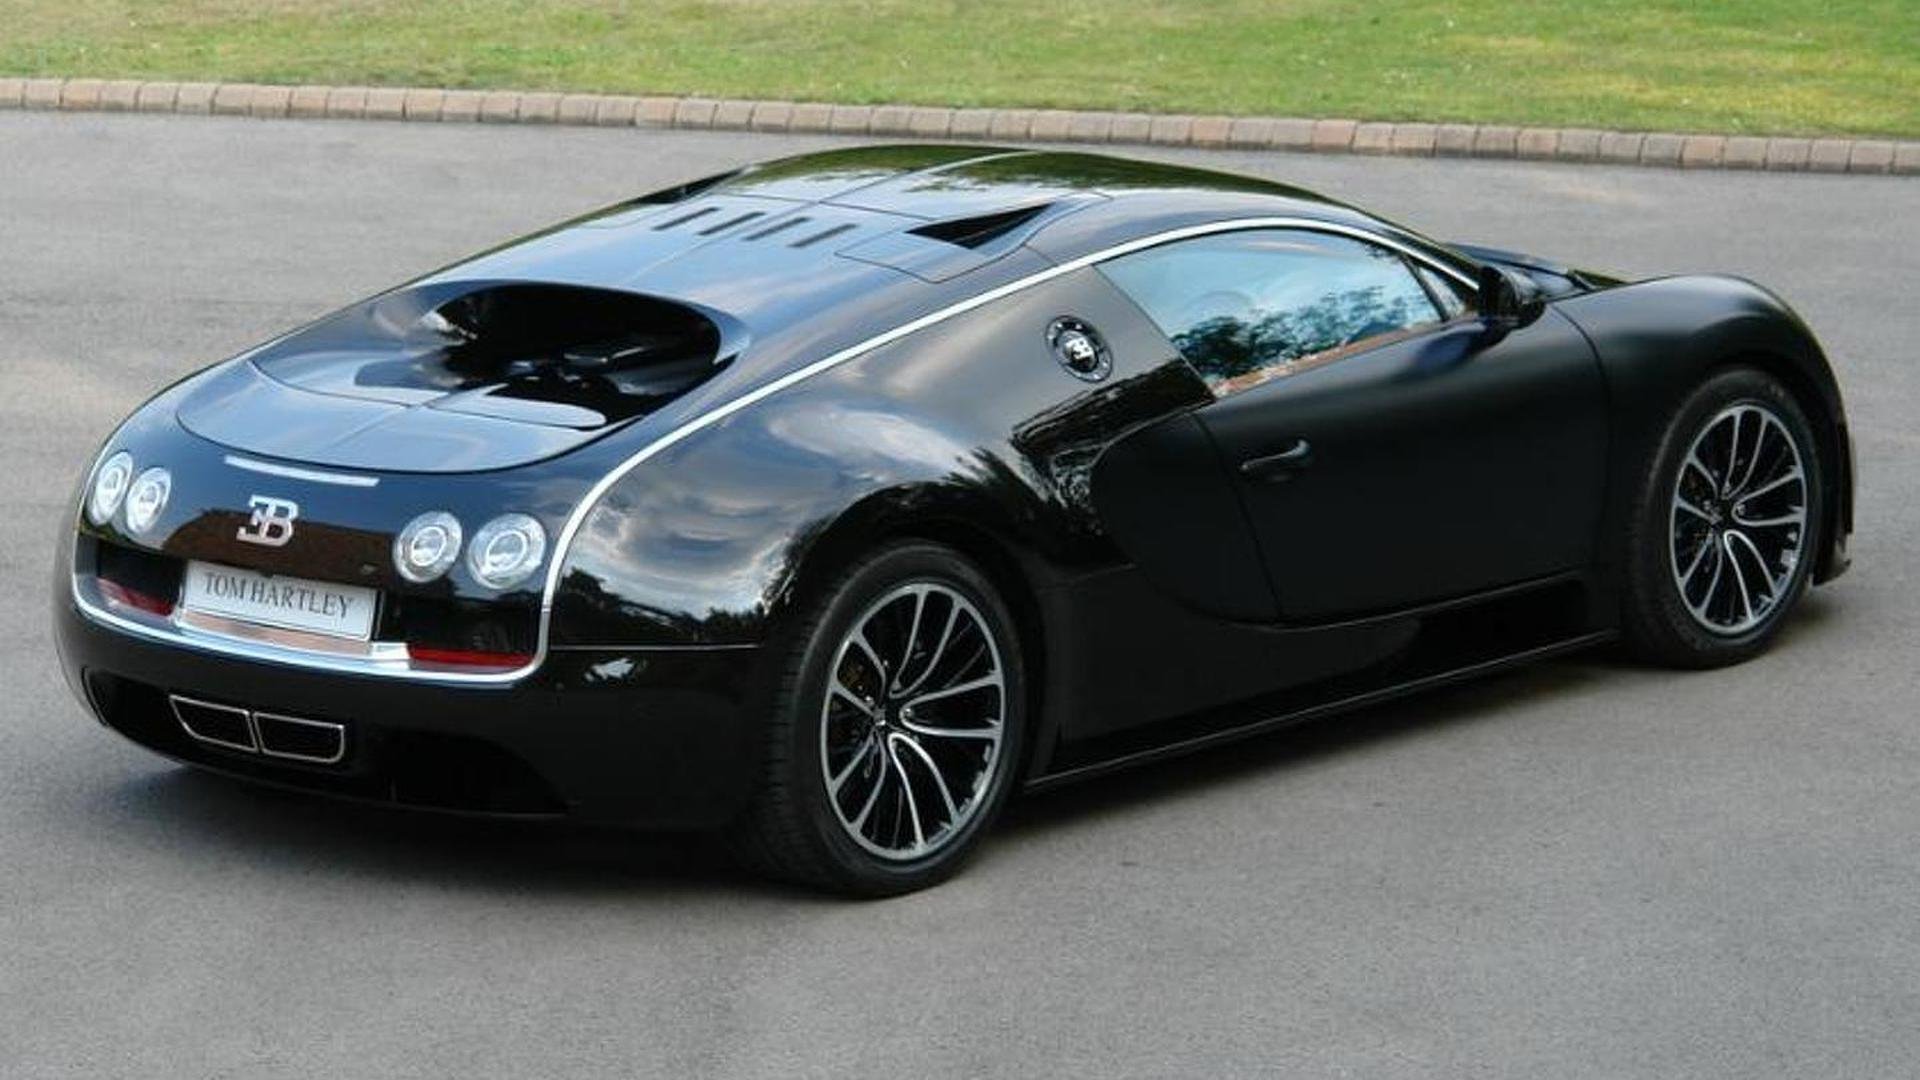 Bugatti black. Bugatti Veyron 16.4 super Sport. Бугатти Вейрон супер спорт черный. Bugatti Veyron 16.4 super Sport черный. Бугатти Вейрон 89.